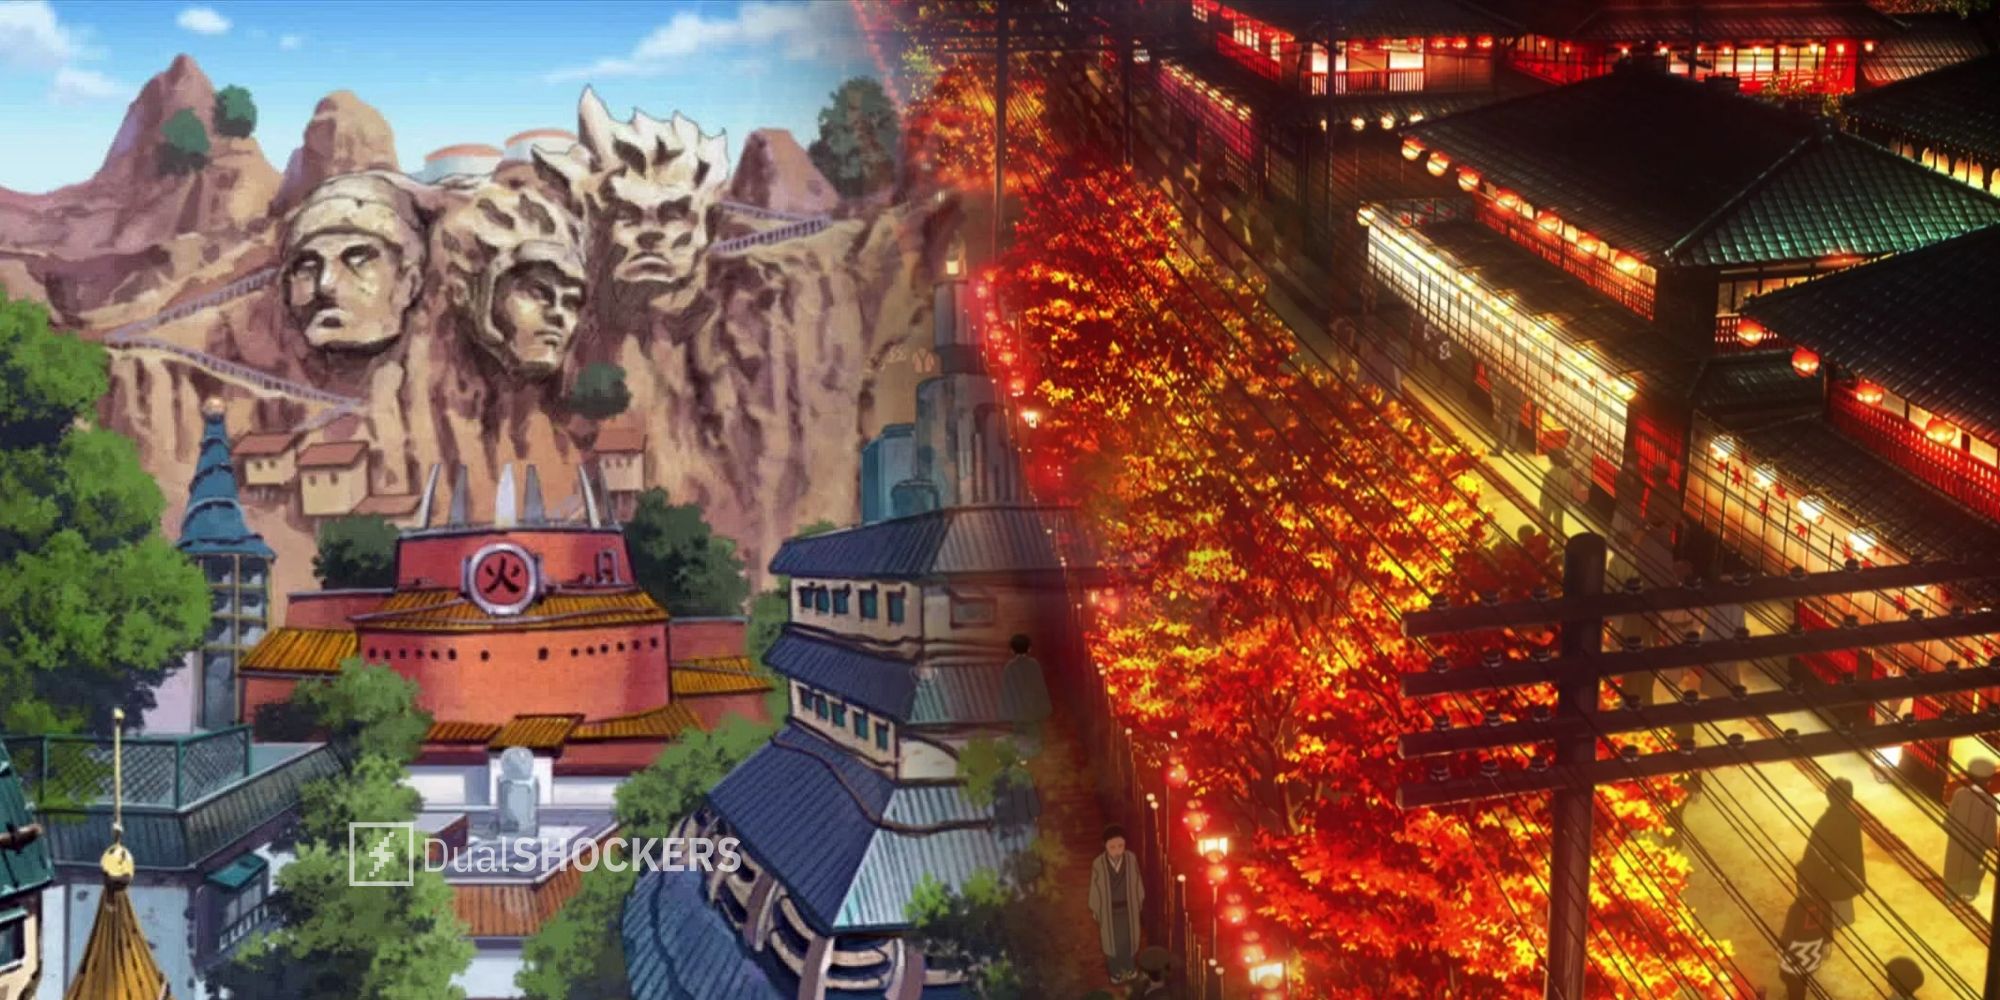 Anime land - Review of Akihabara, Chiyoda, Japan - Tripadvisor